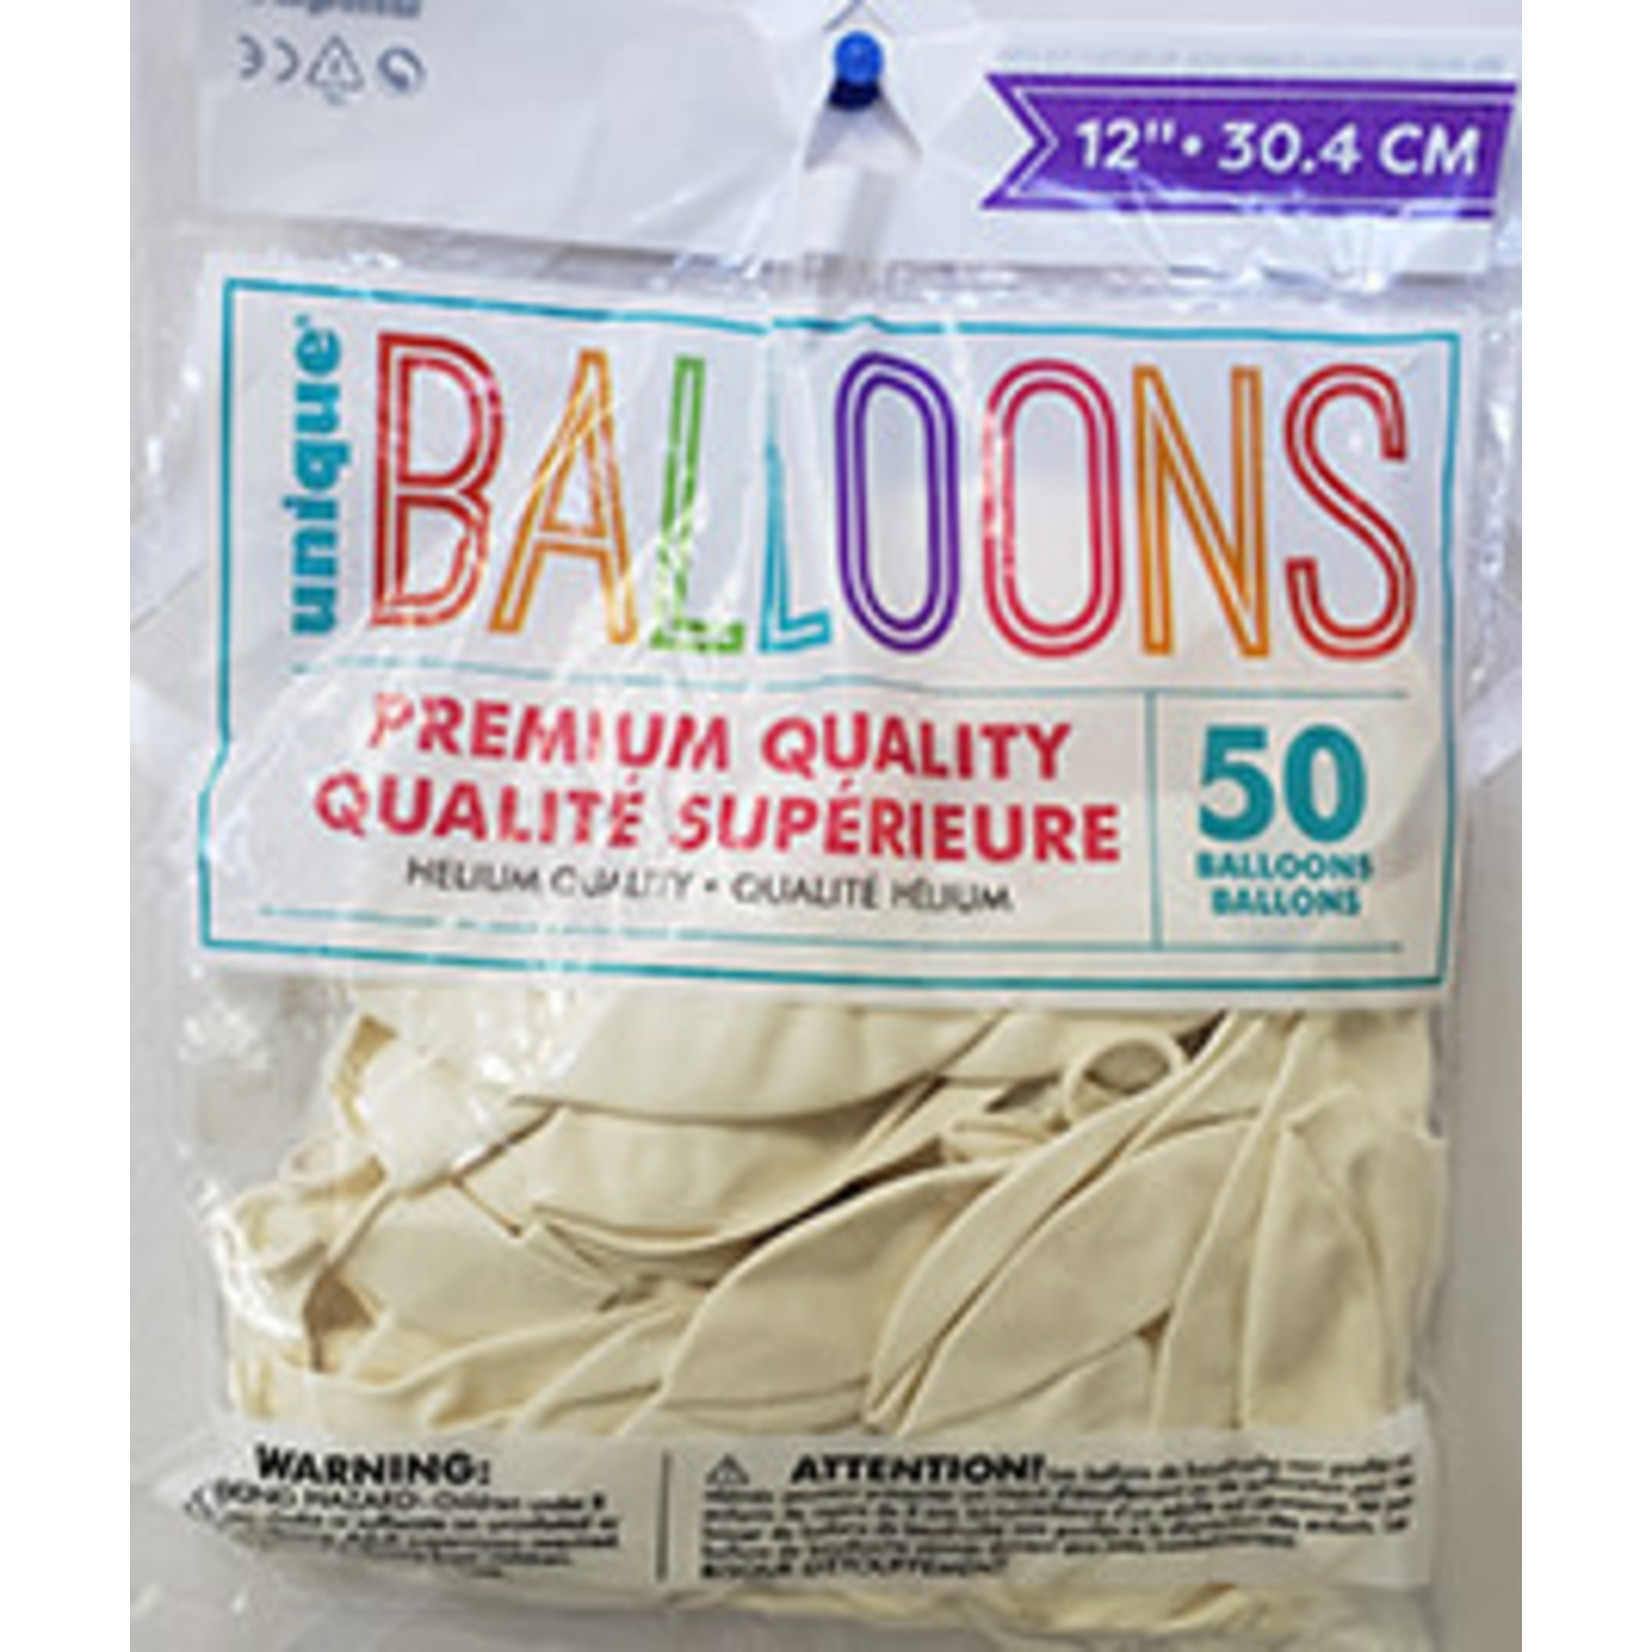 unique 12" Linen White Premium Balloons - 50ct.